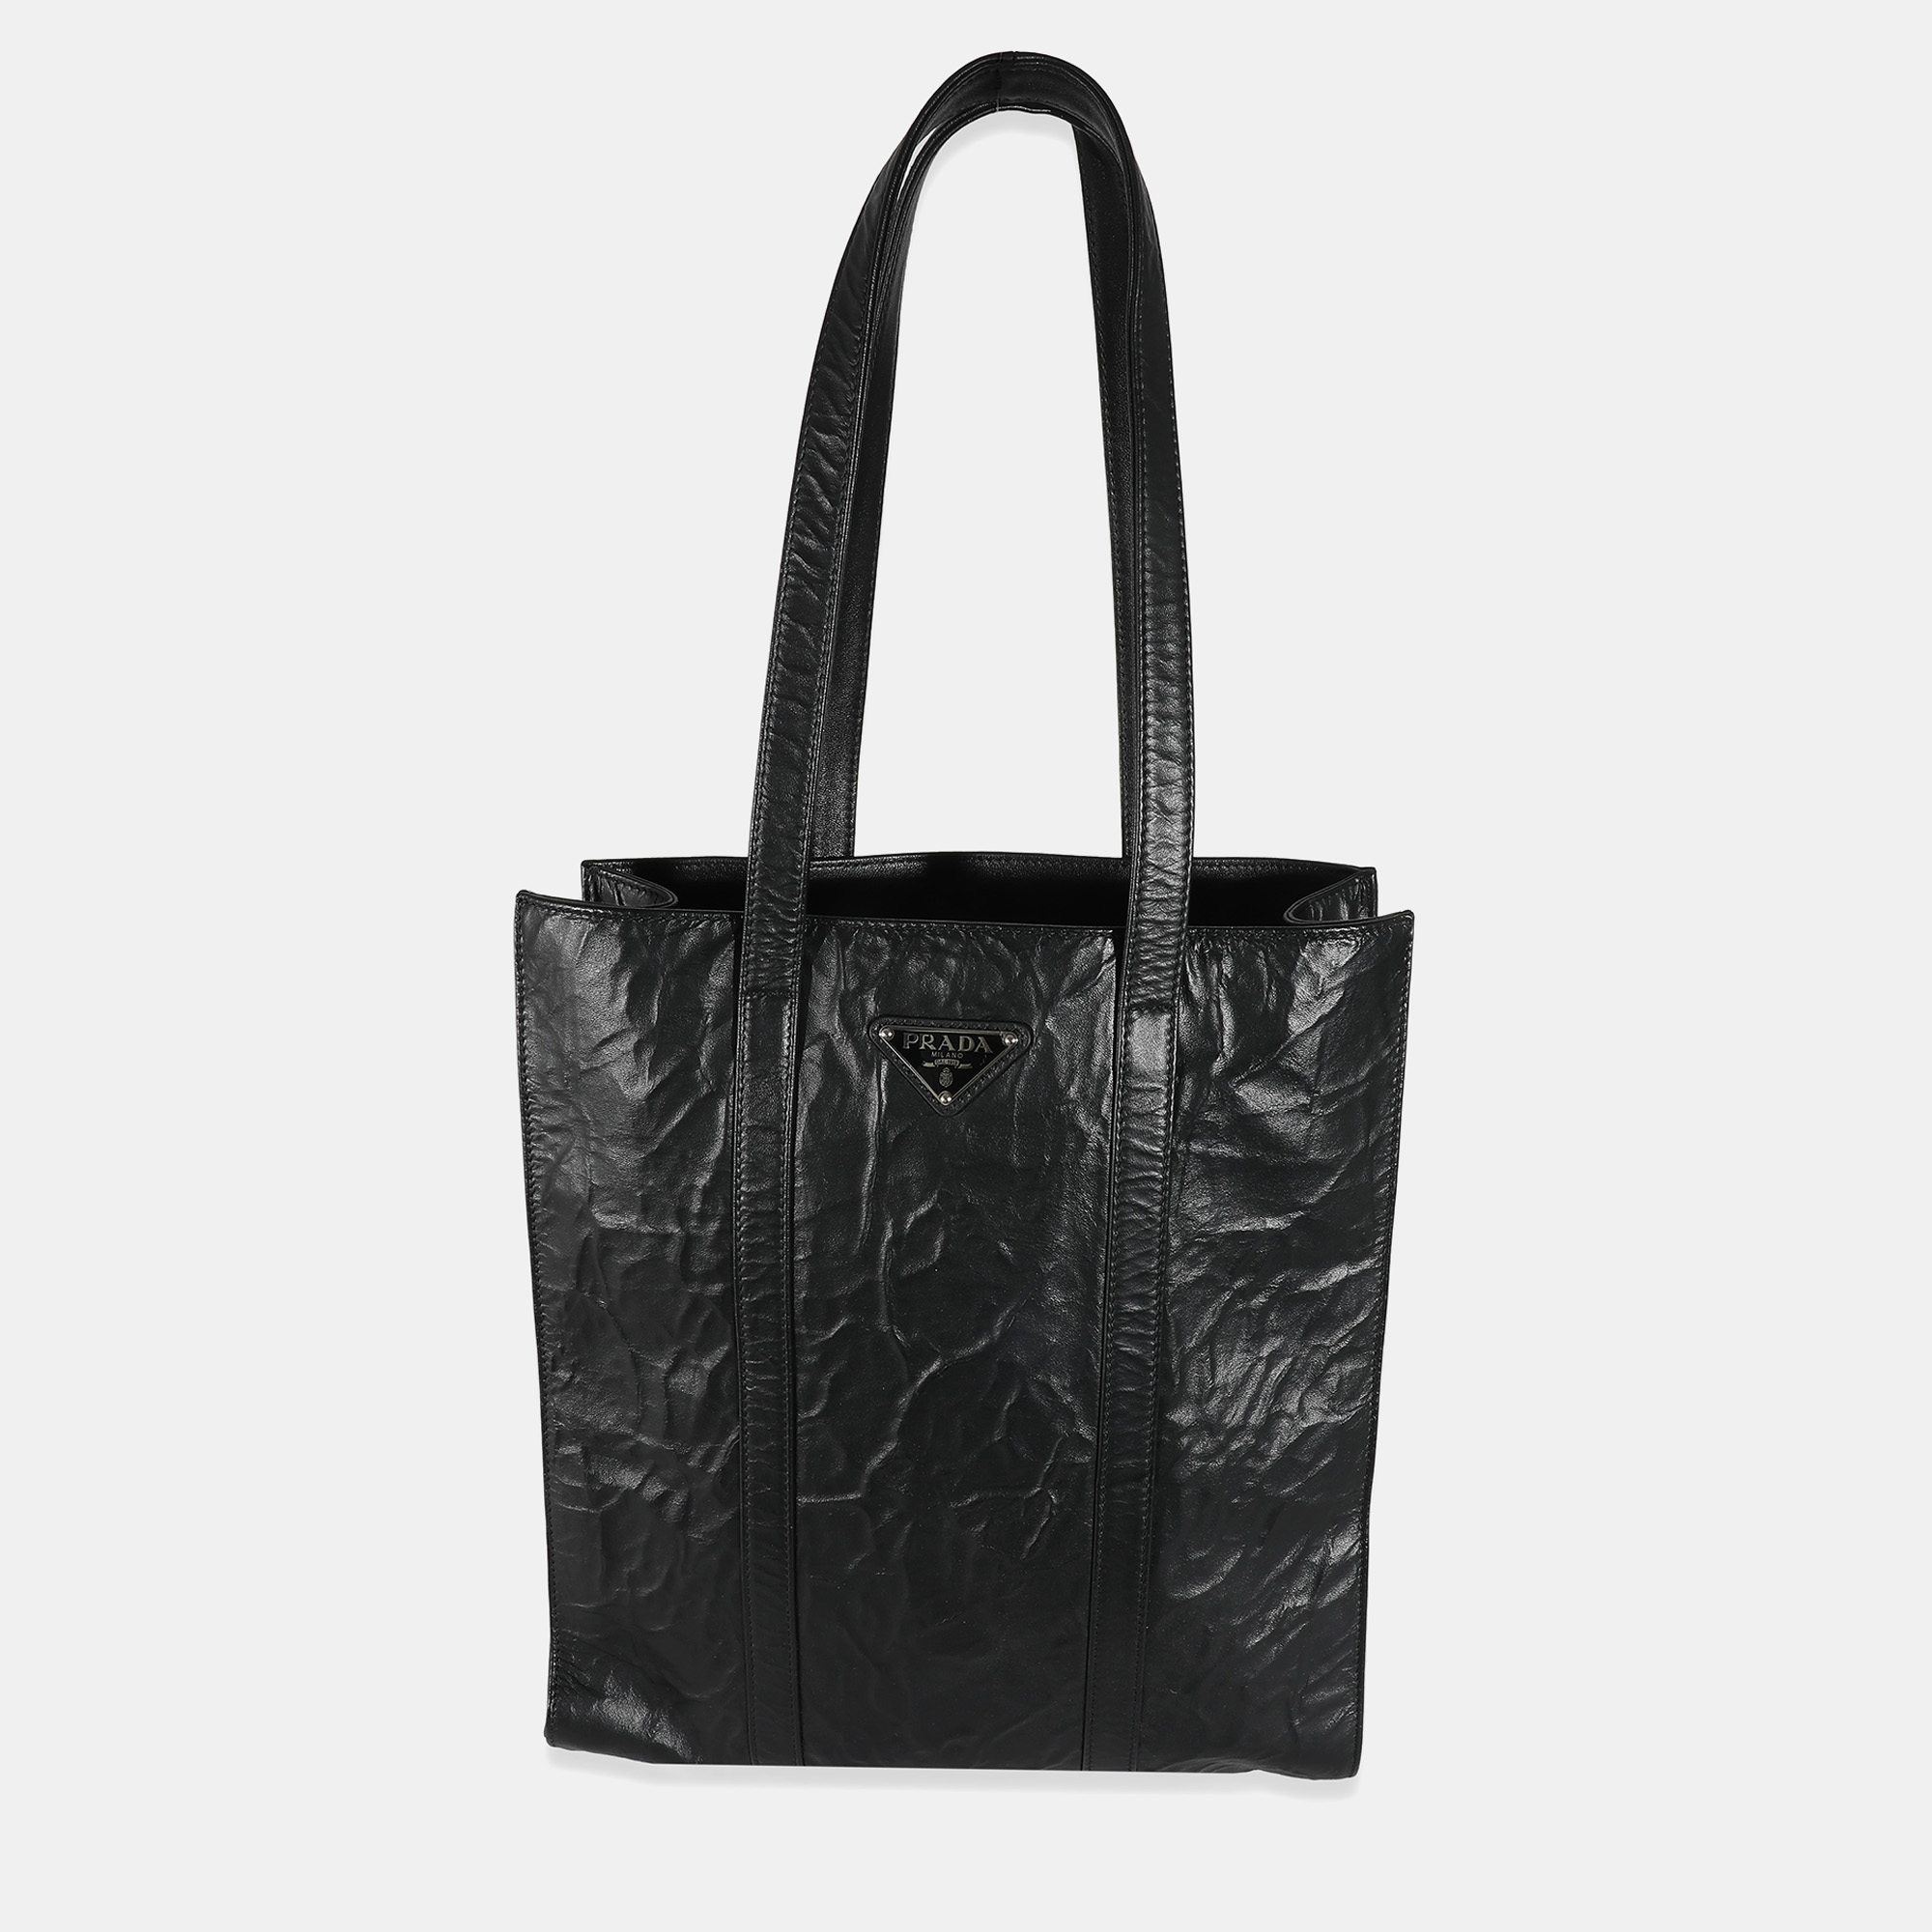 Prada black antique nappa leather small tote bag